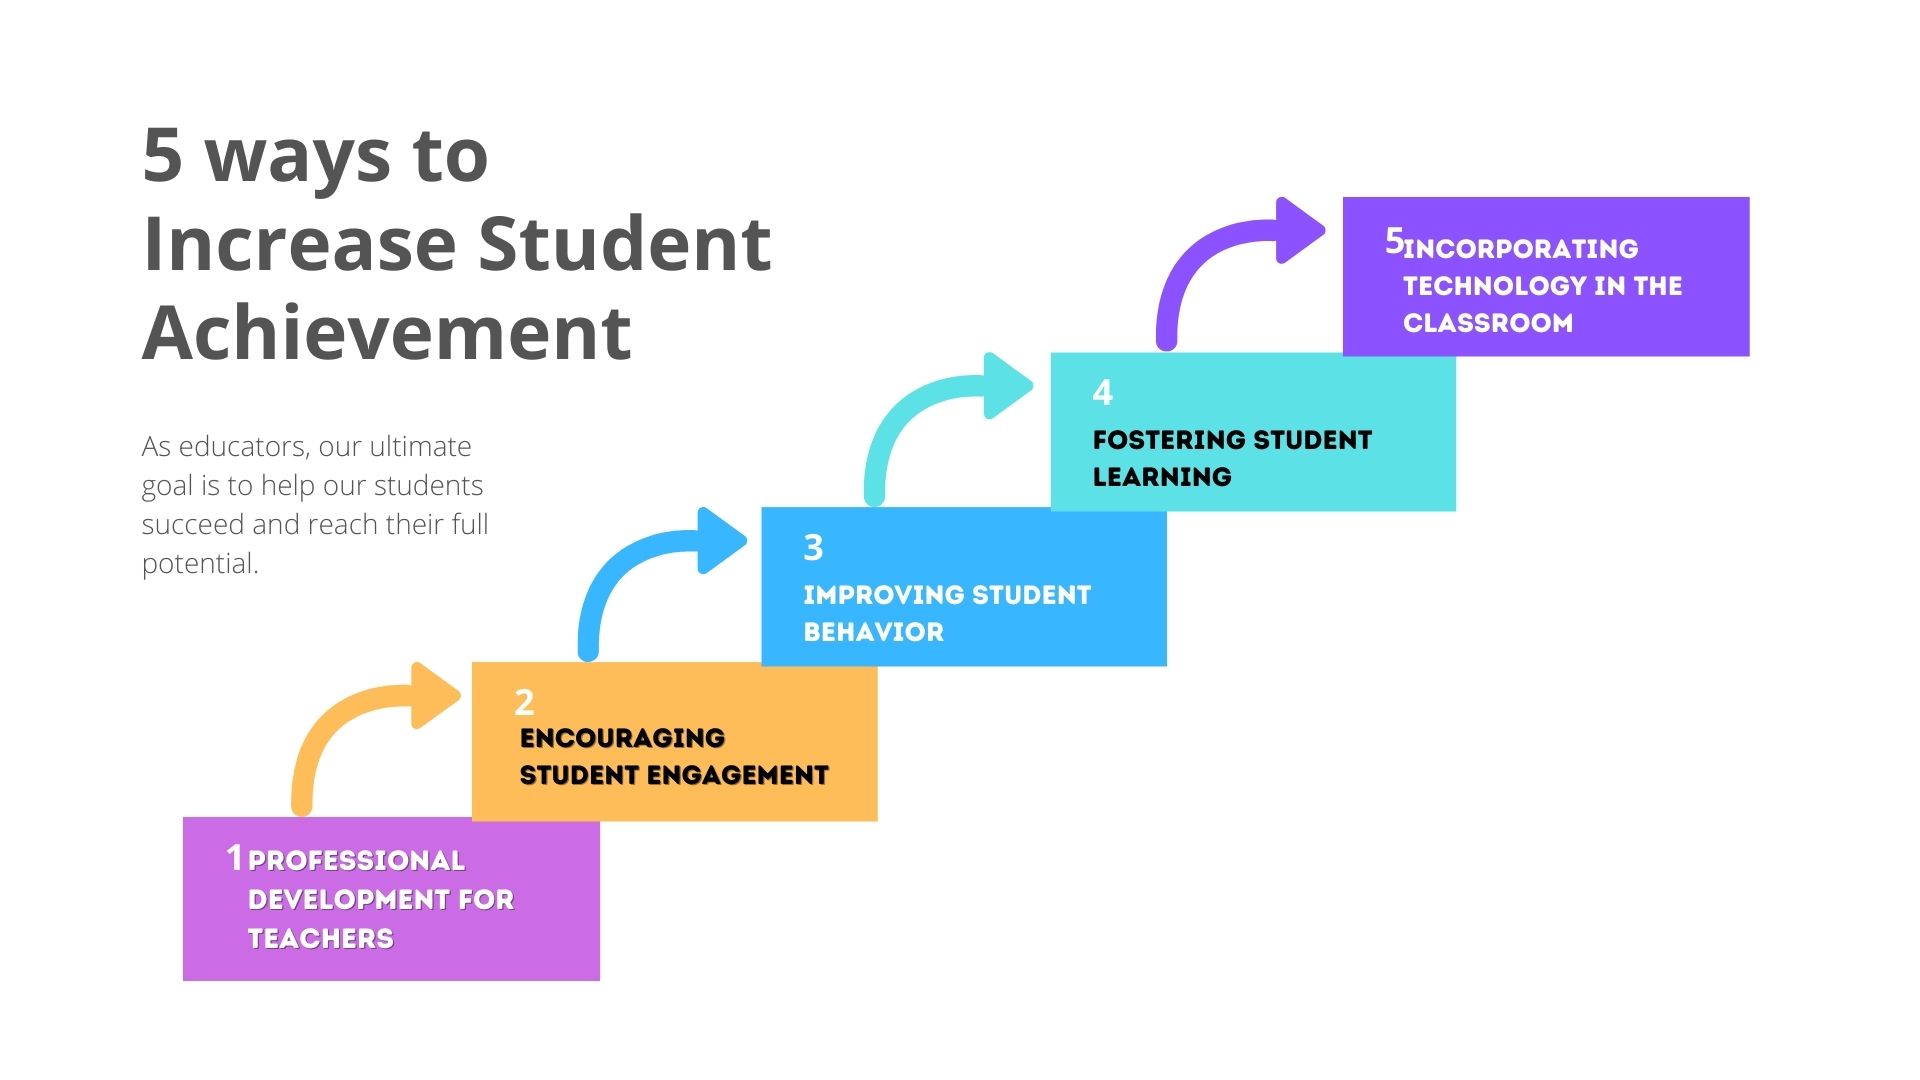 5 ways to Increase Student Achievement